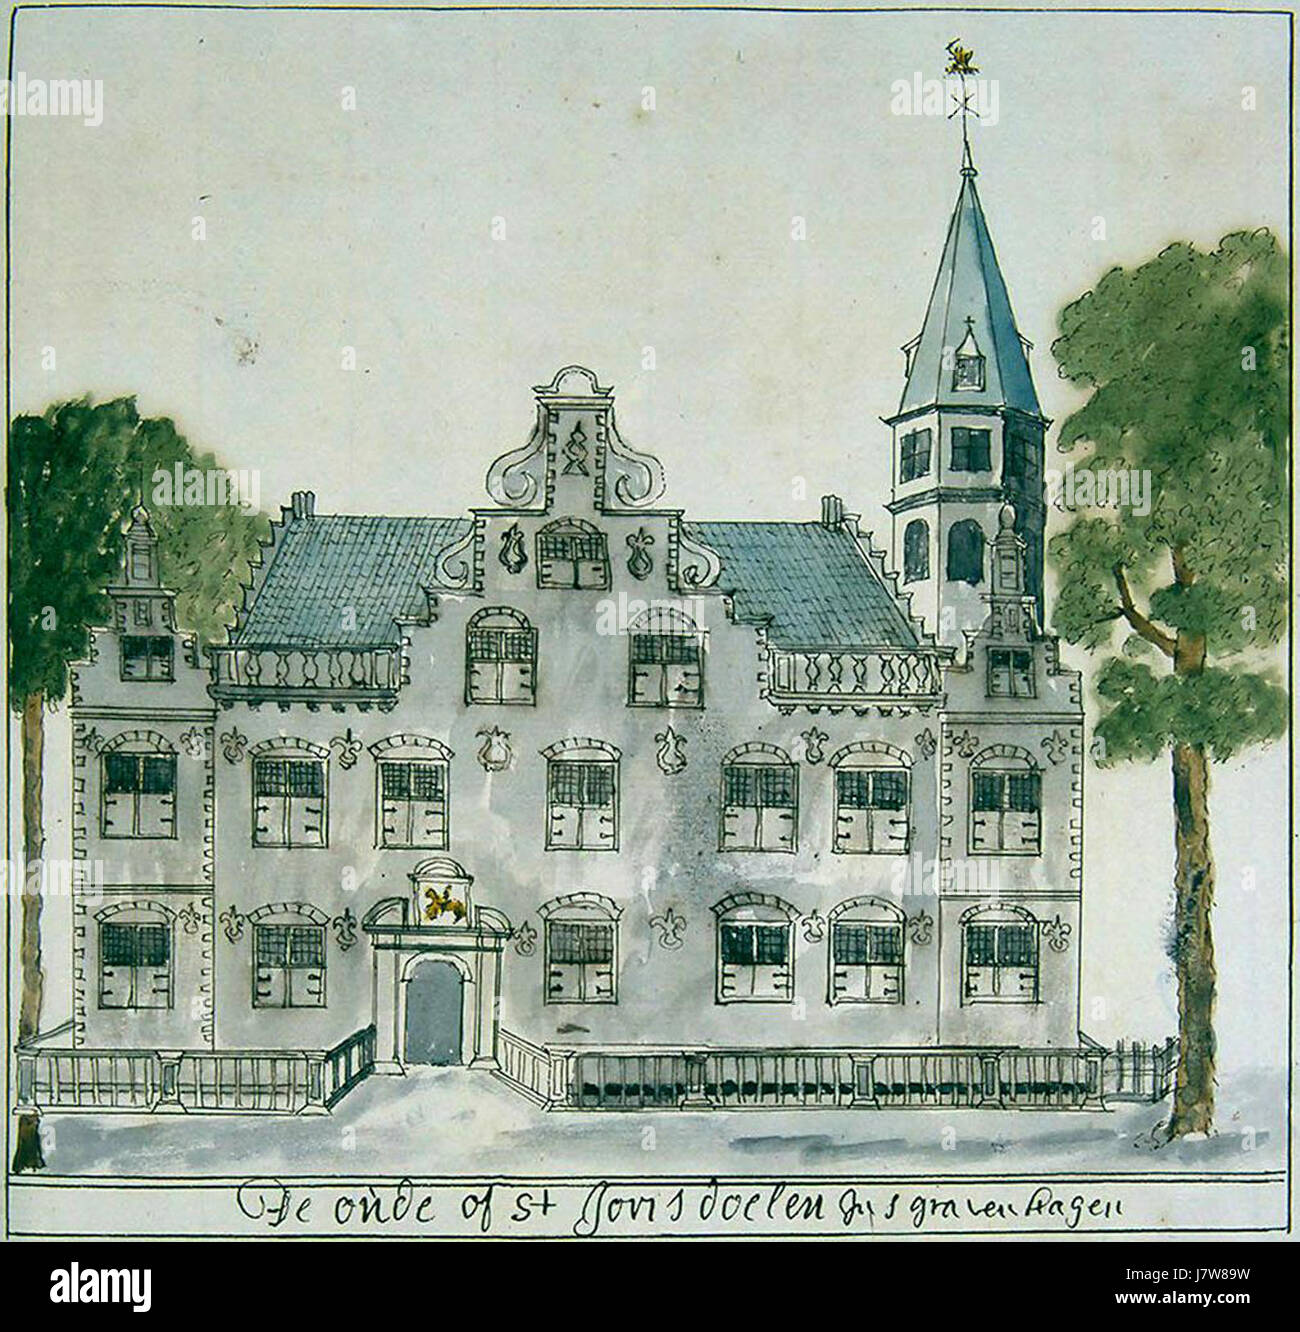 De oude of St. Joris Doelen in sGravenhagen; circa 1720 Stock Photo